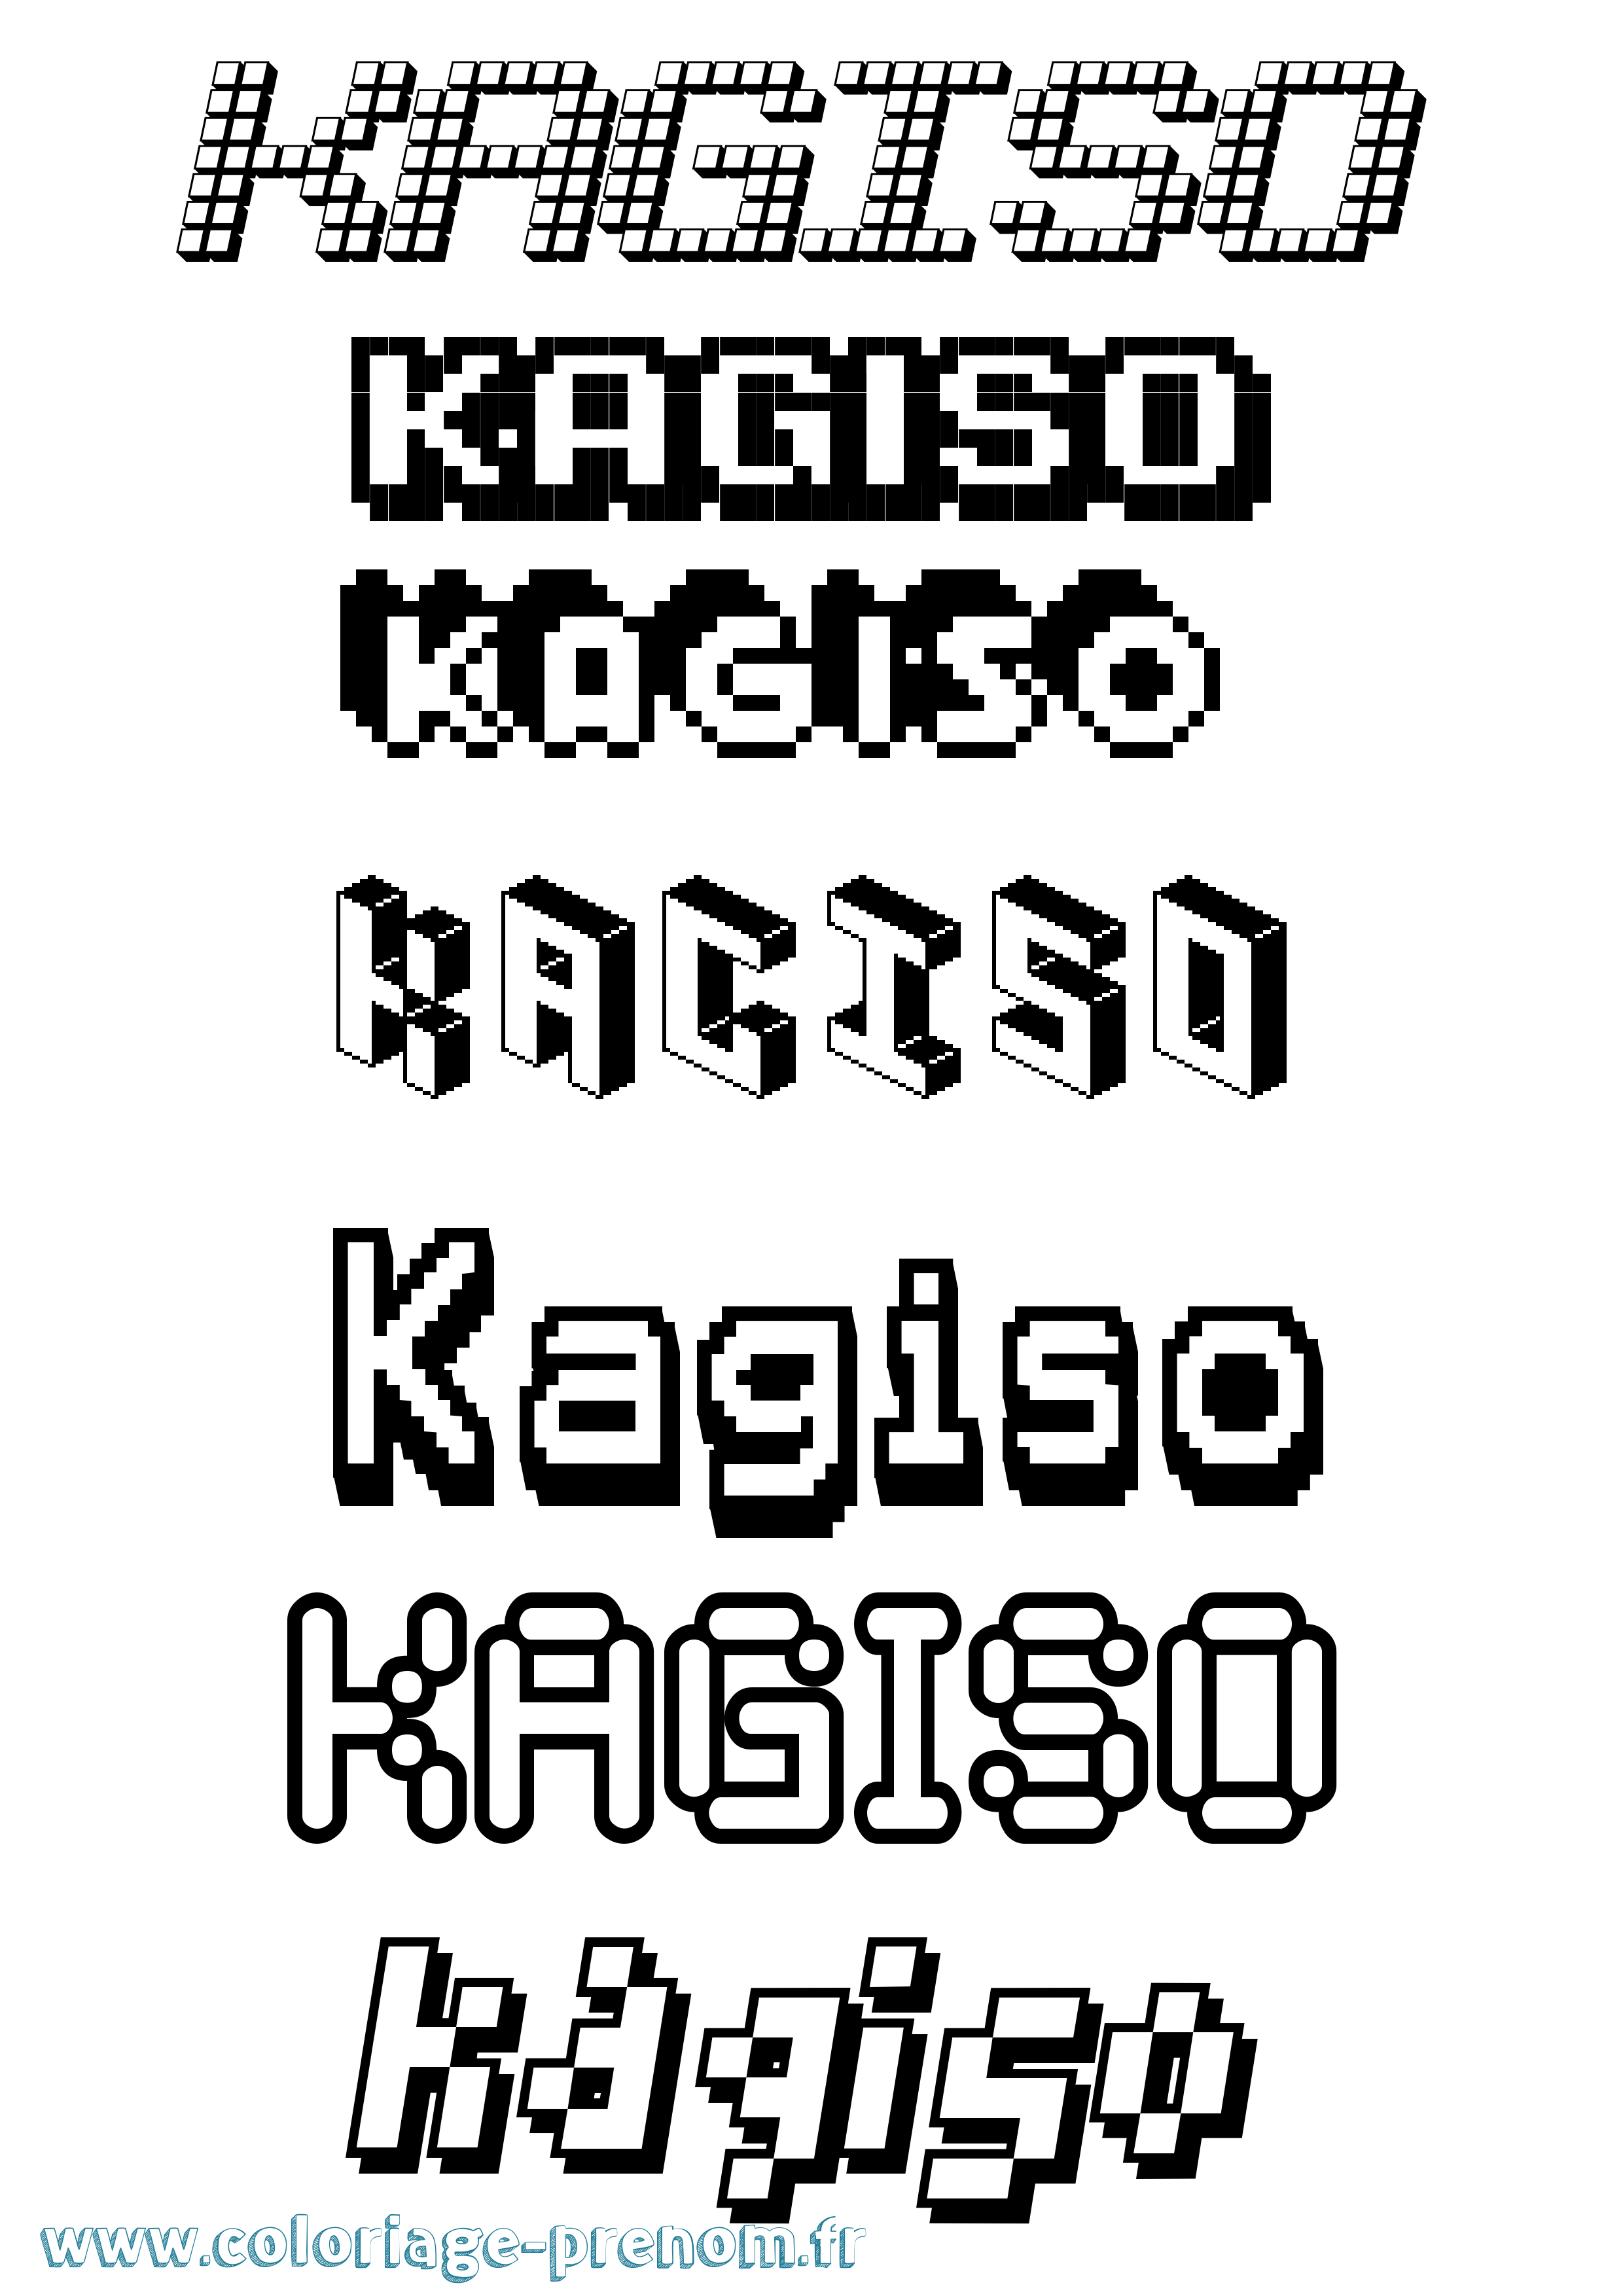 Coloriage prénom Kagiso Pixel